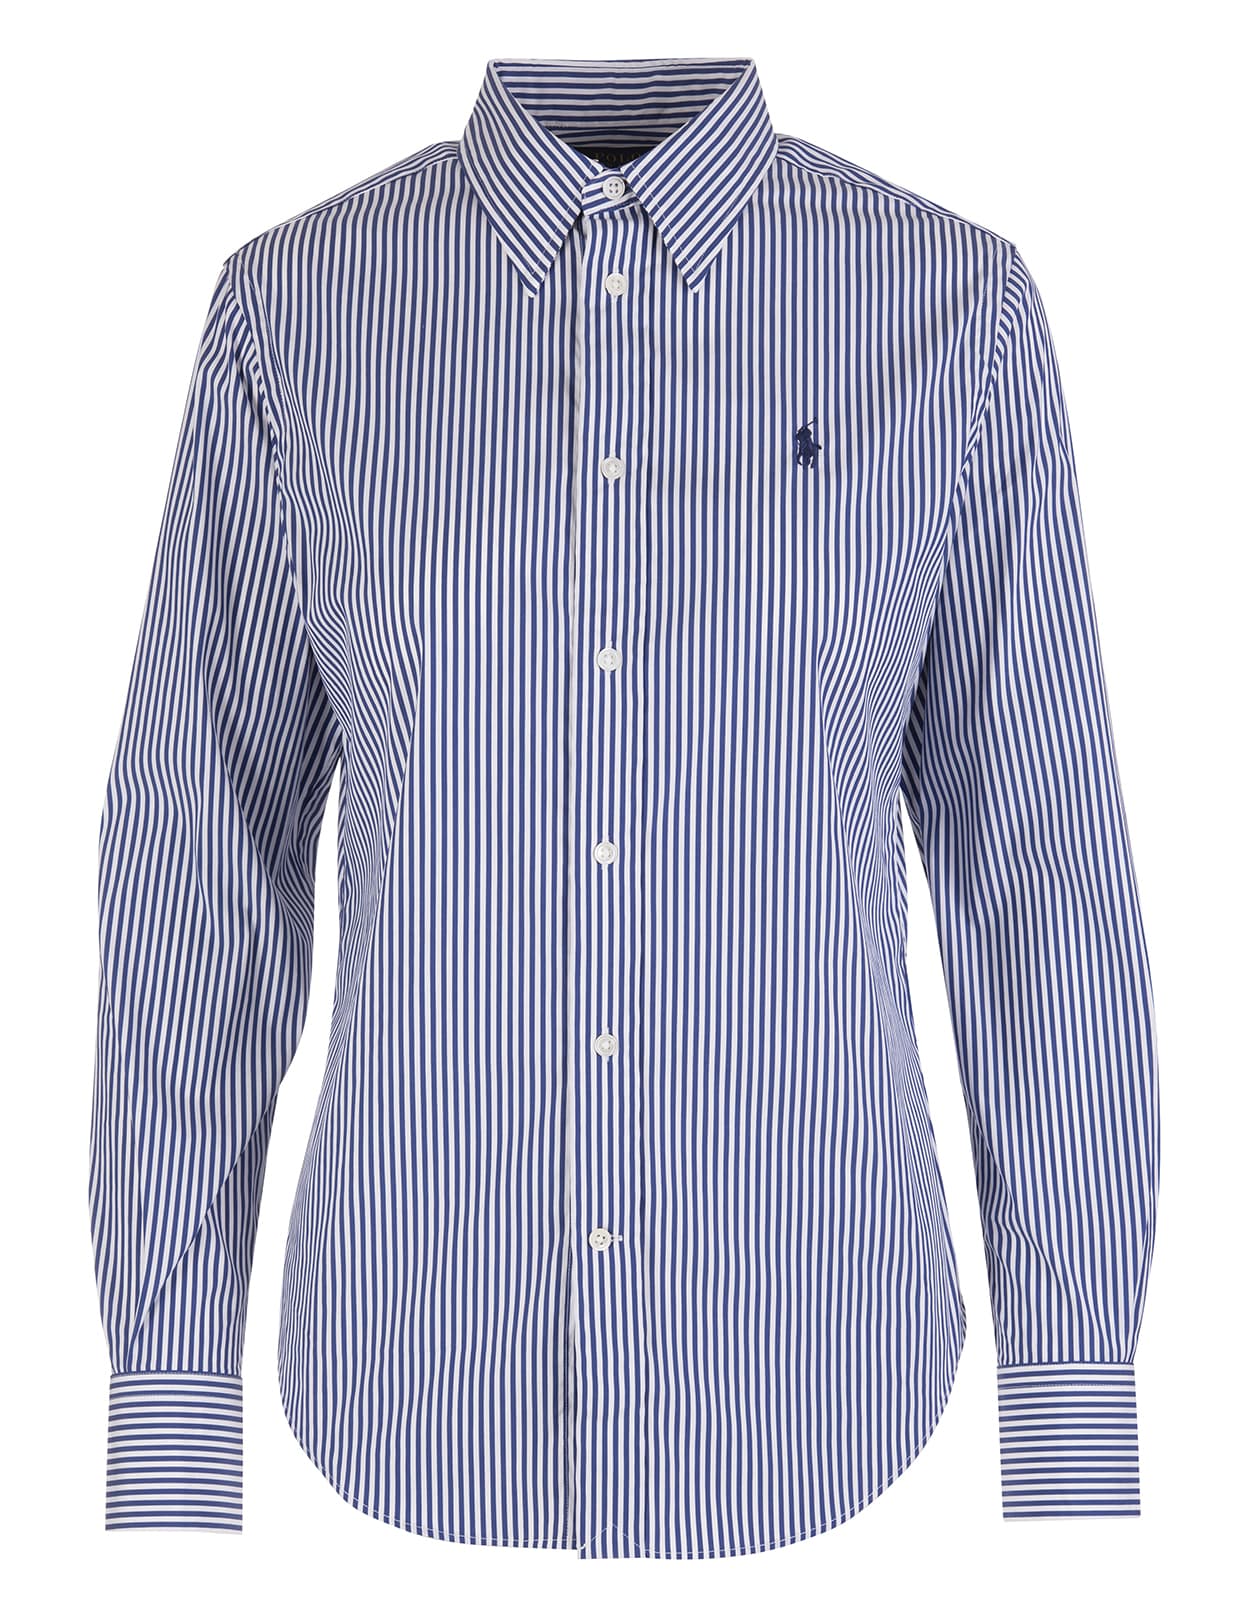 Ralph Lauren Woman Classic Fit Navy Blue Striped Cotton Shirt